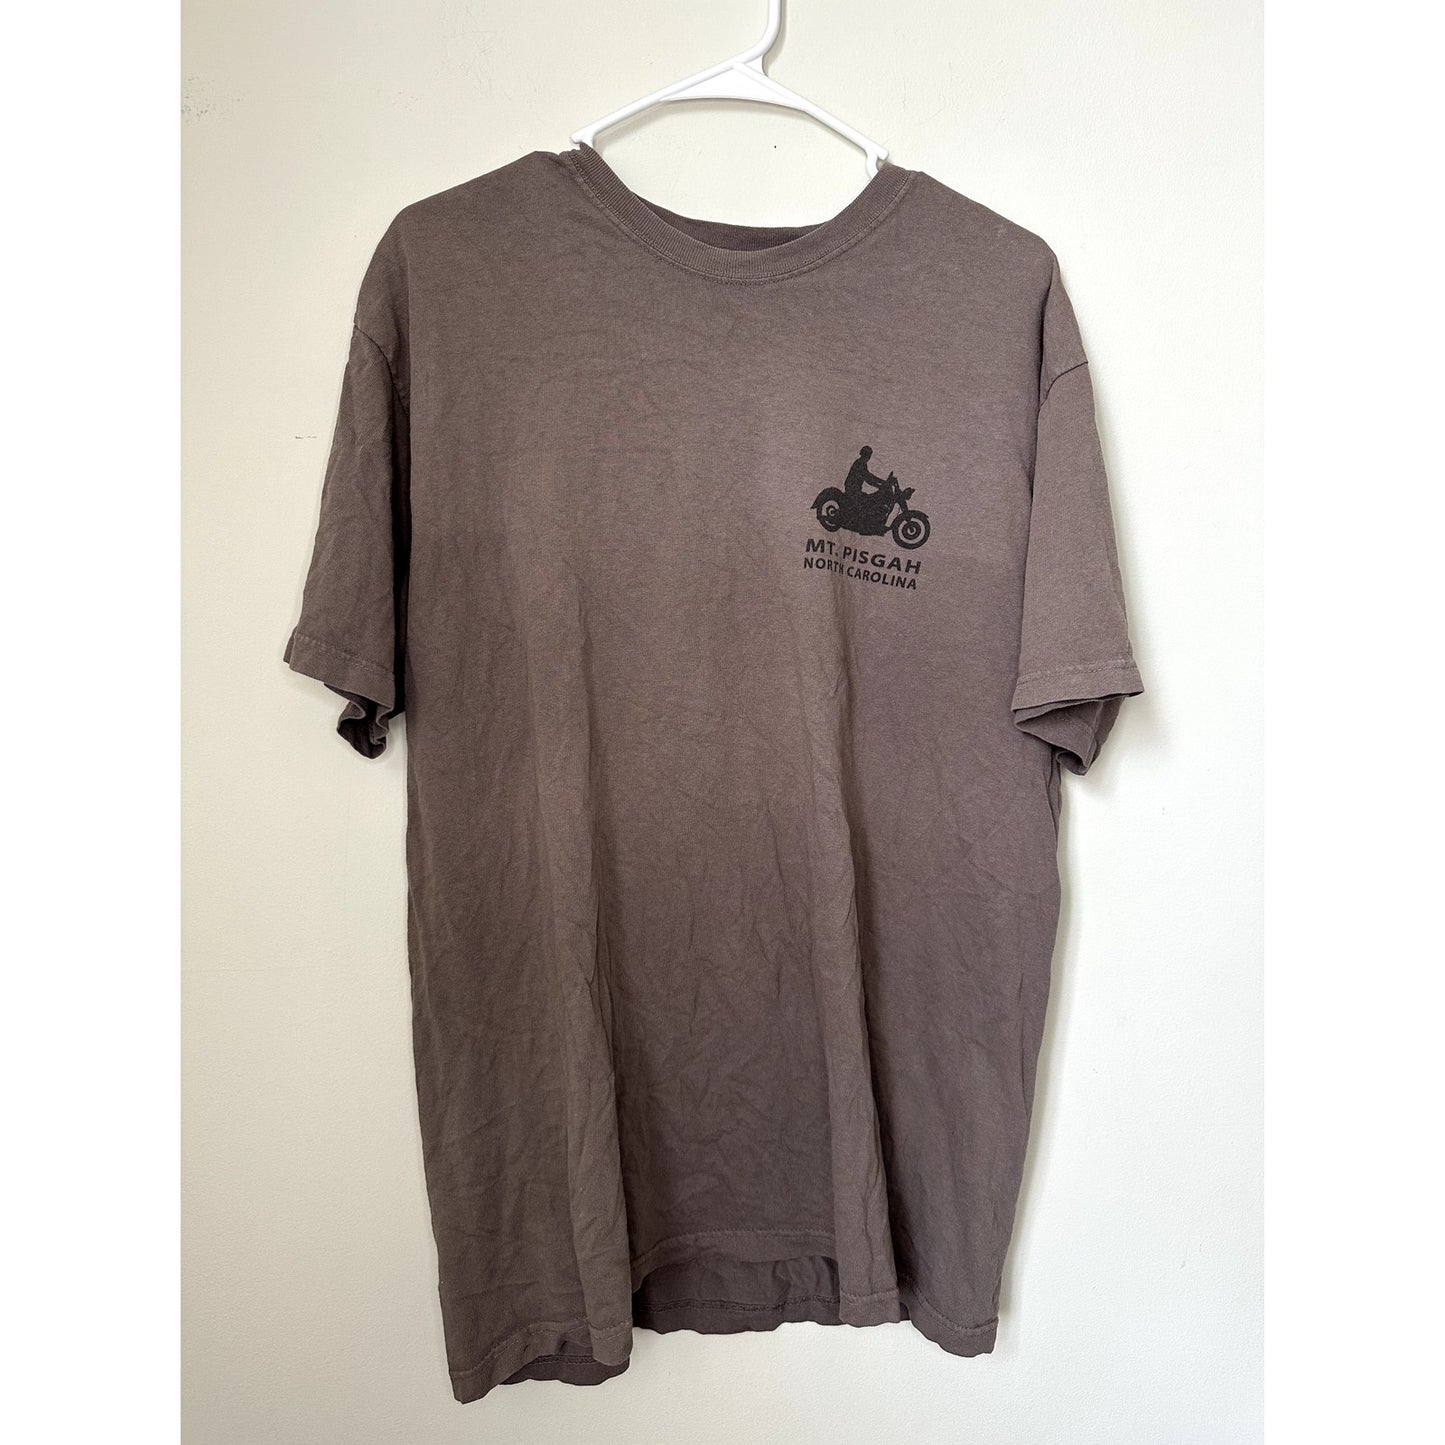 Mt. Pisgah North Carolina Graphic T-Shirt, Size L